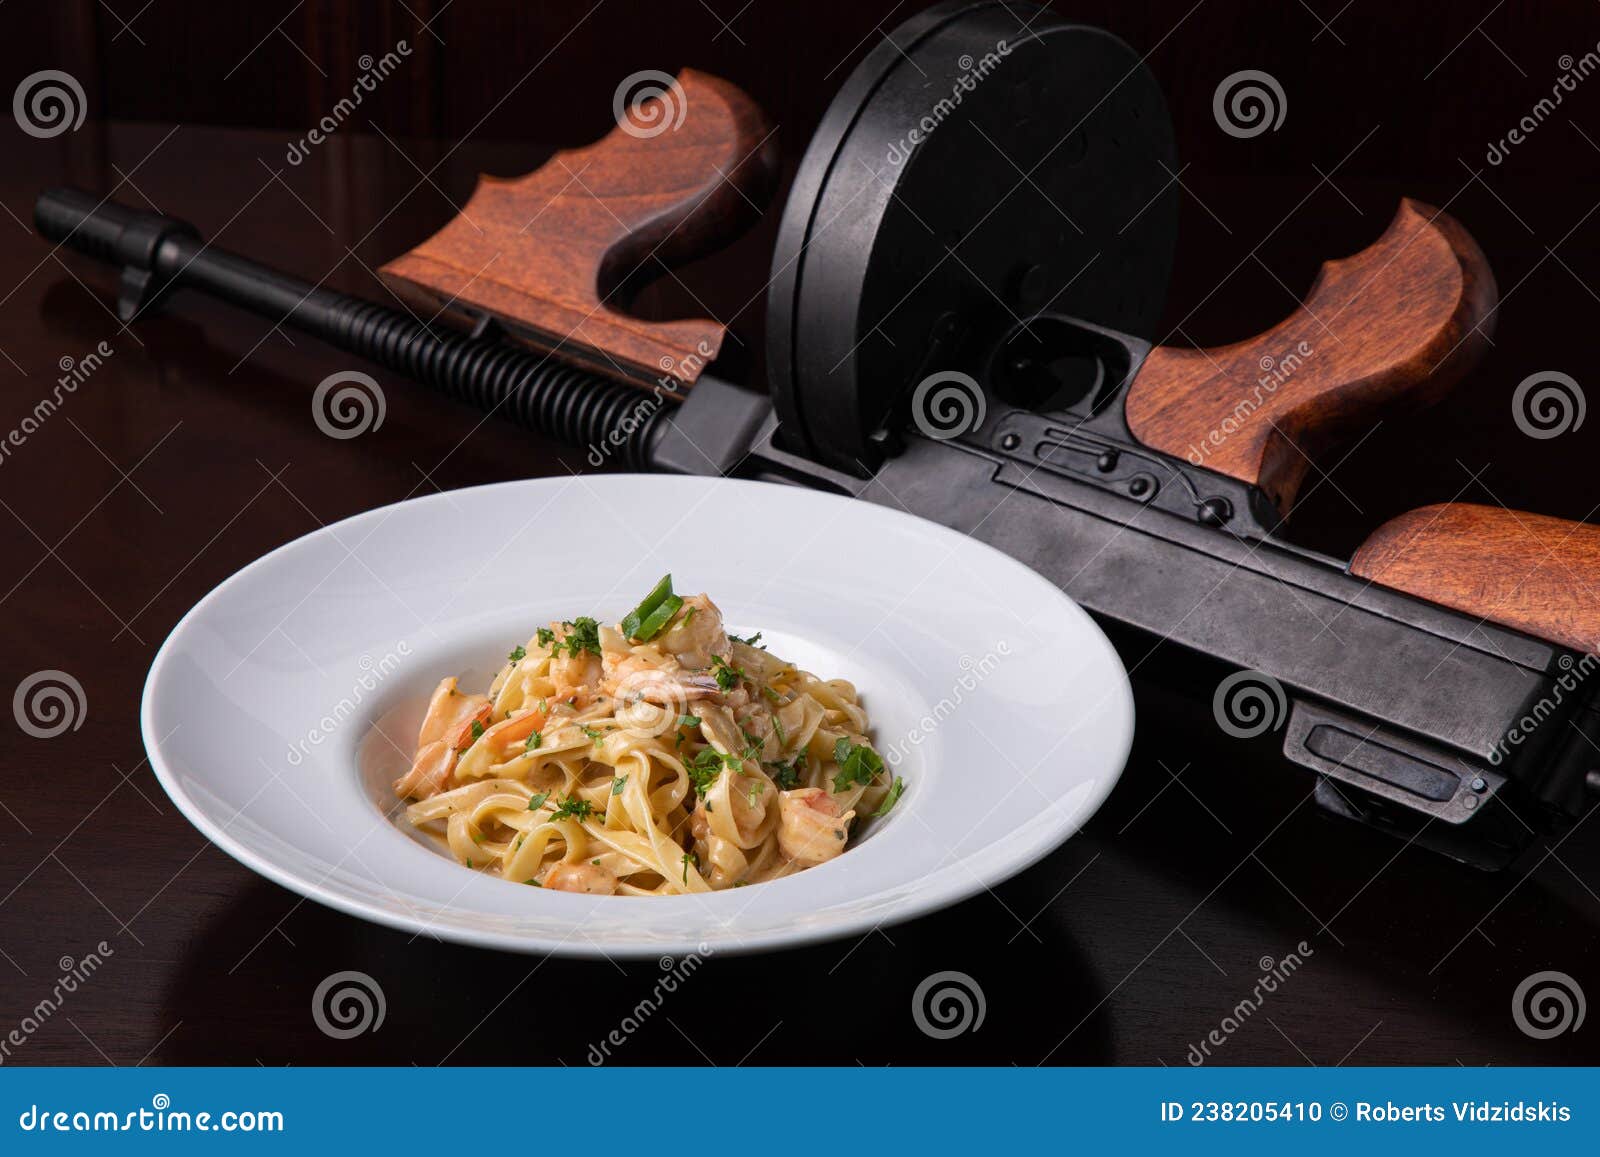 https://thumbs.dreamstime.com/z/thompson-submachine-gun-italian-pasta-prawns-chili-pepper-greens-dark-brown-table-vintage-mood-style-background-238205410.jpg